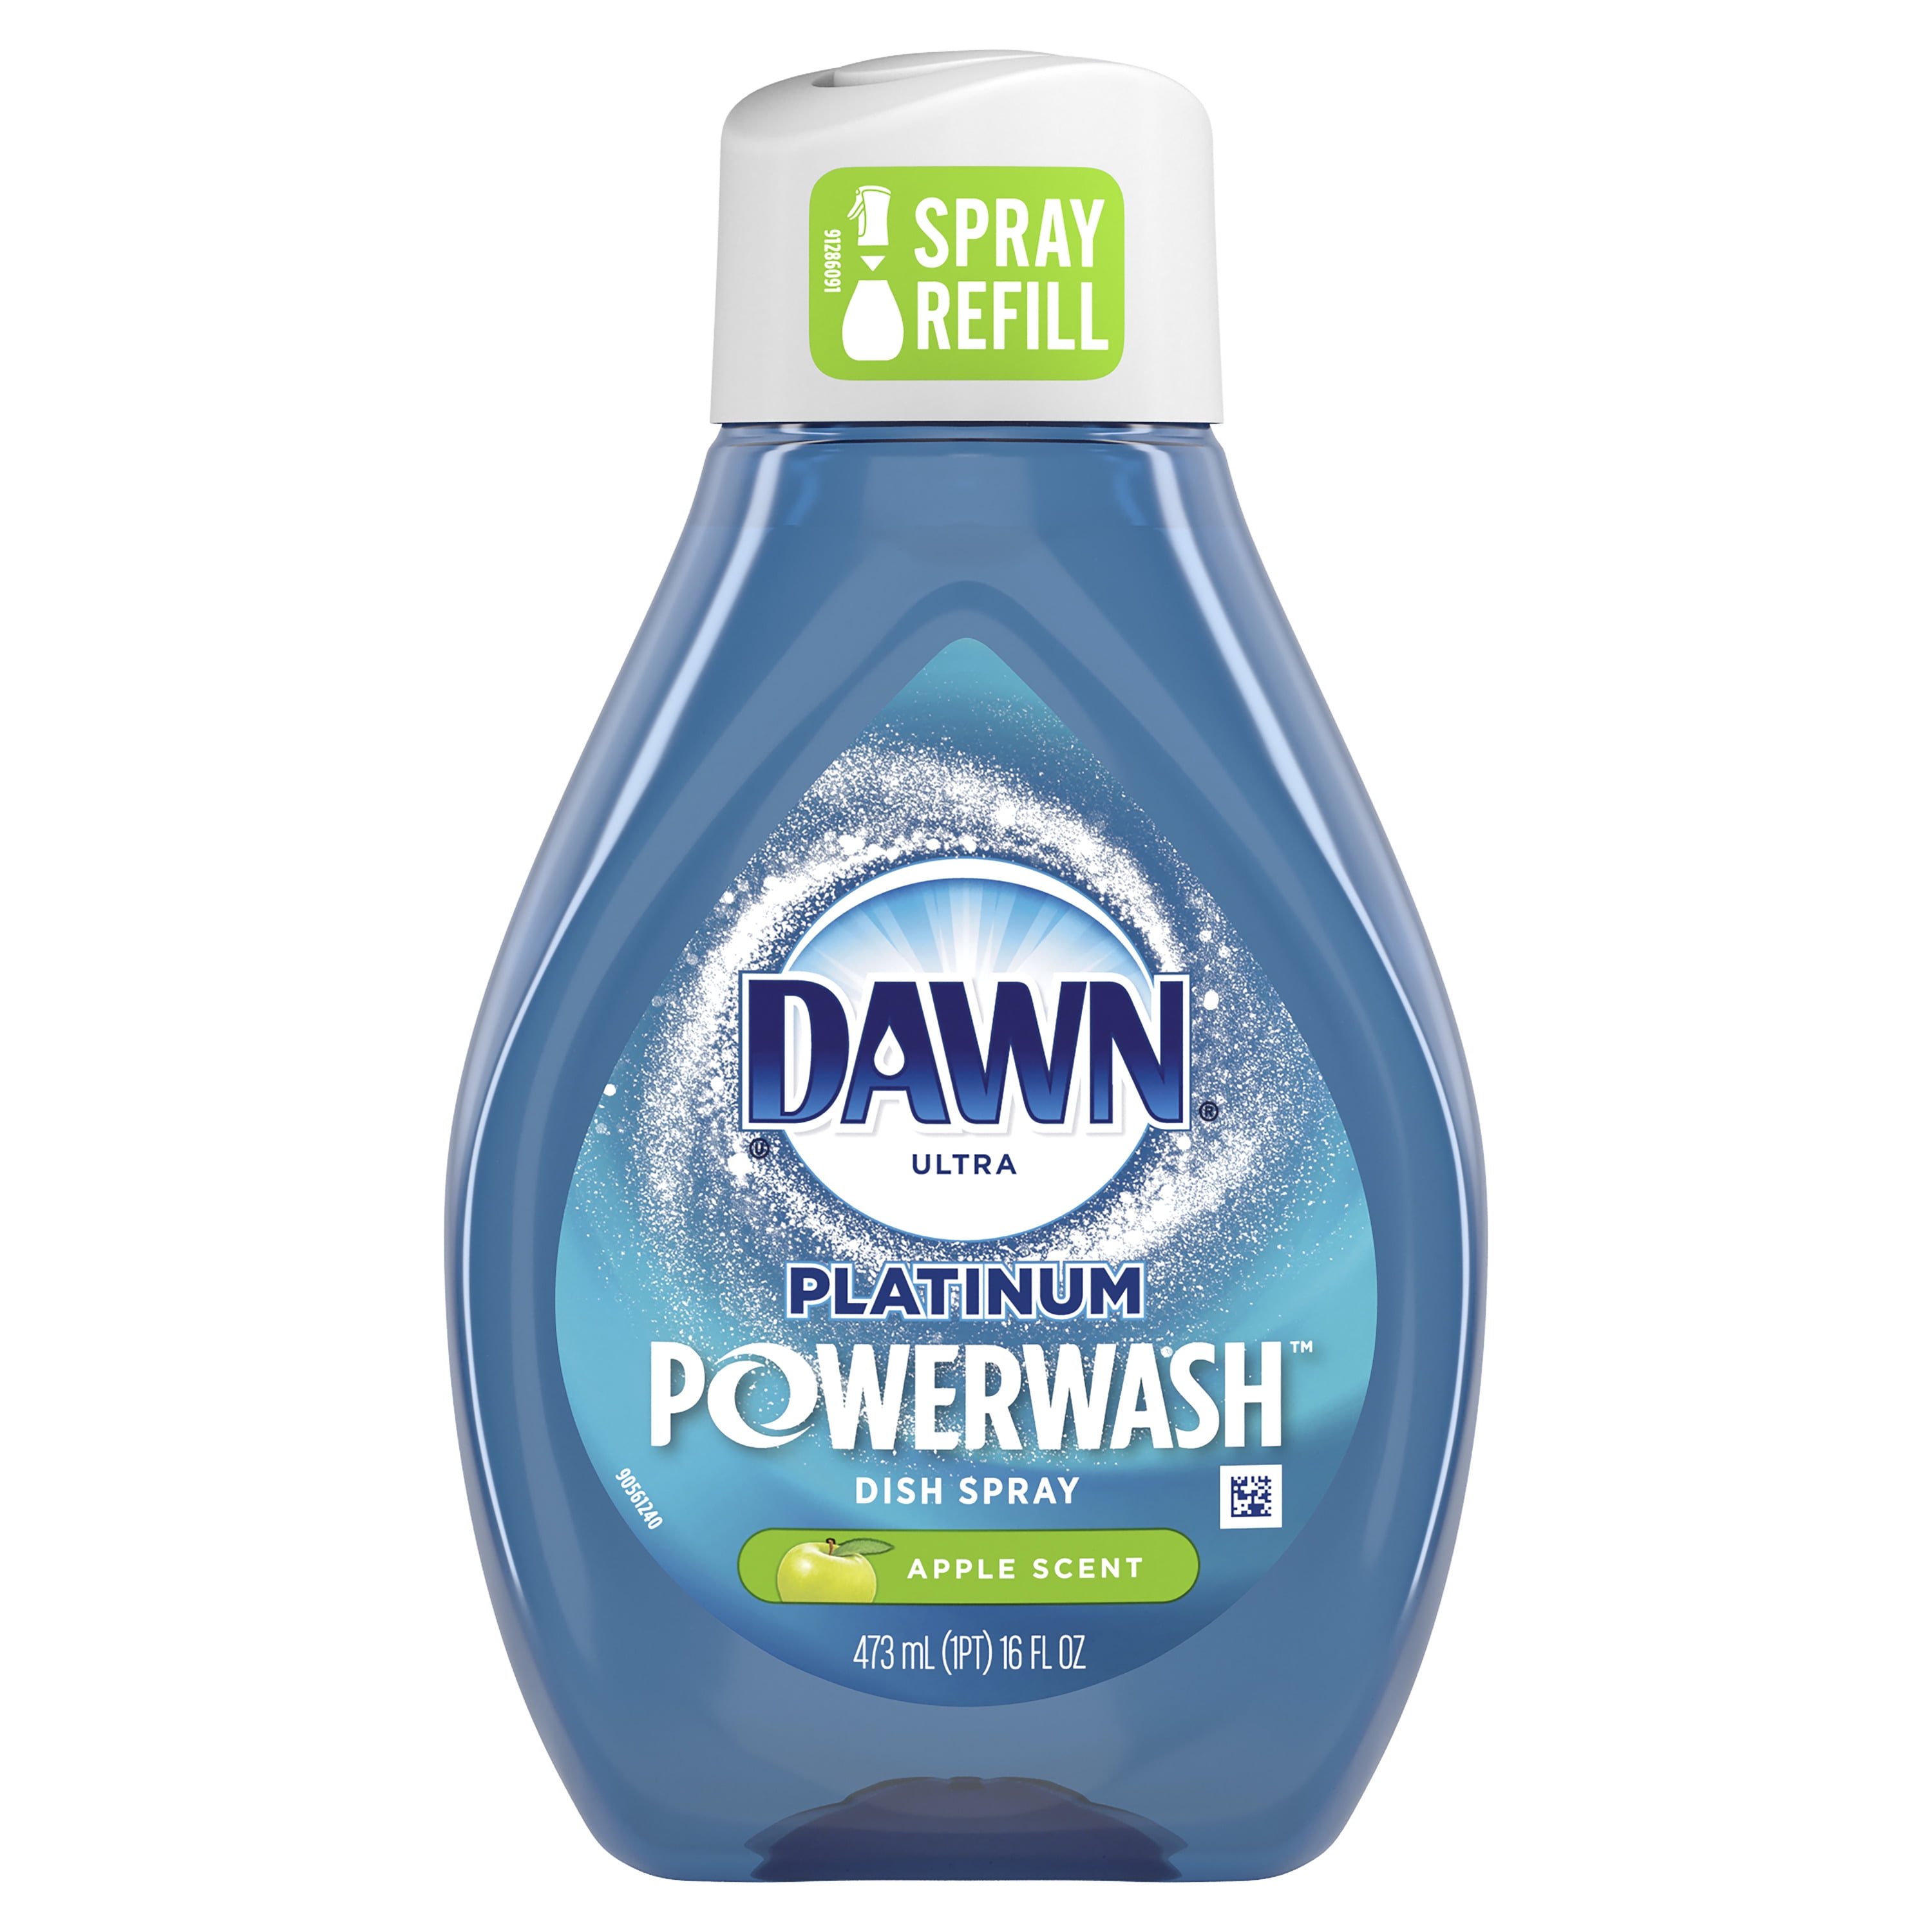 Dawn Platinum Powerwash Dish Spray, Dish Soap, Apple Scent refill, 16